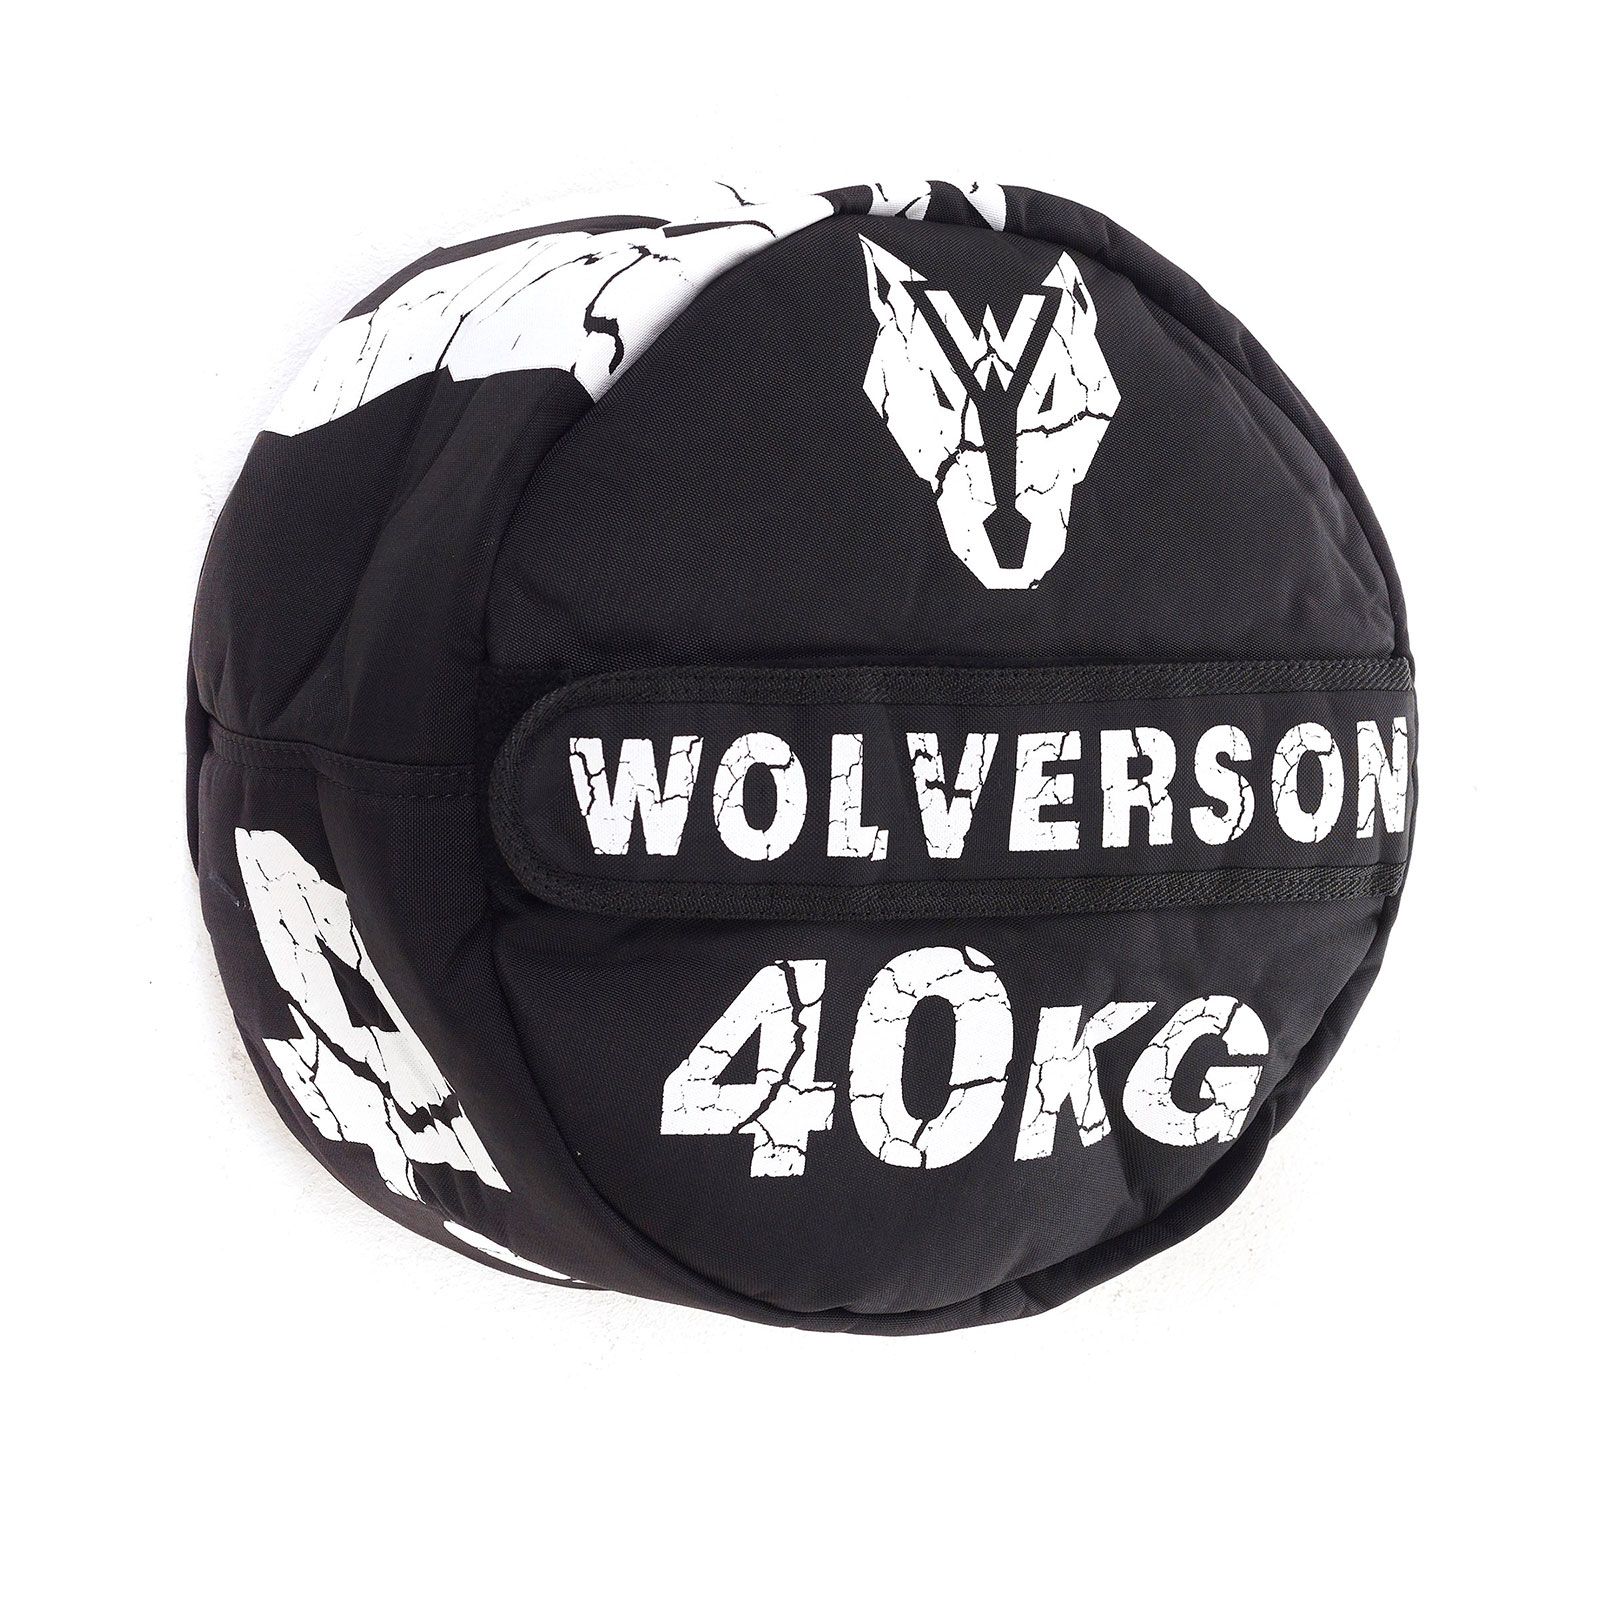 Wolverson Strongman Sandbags